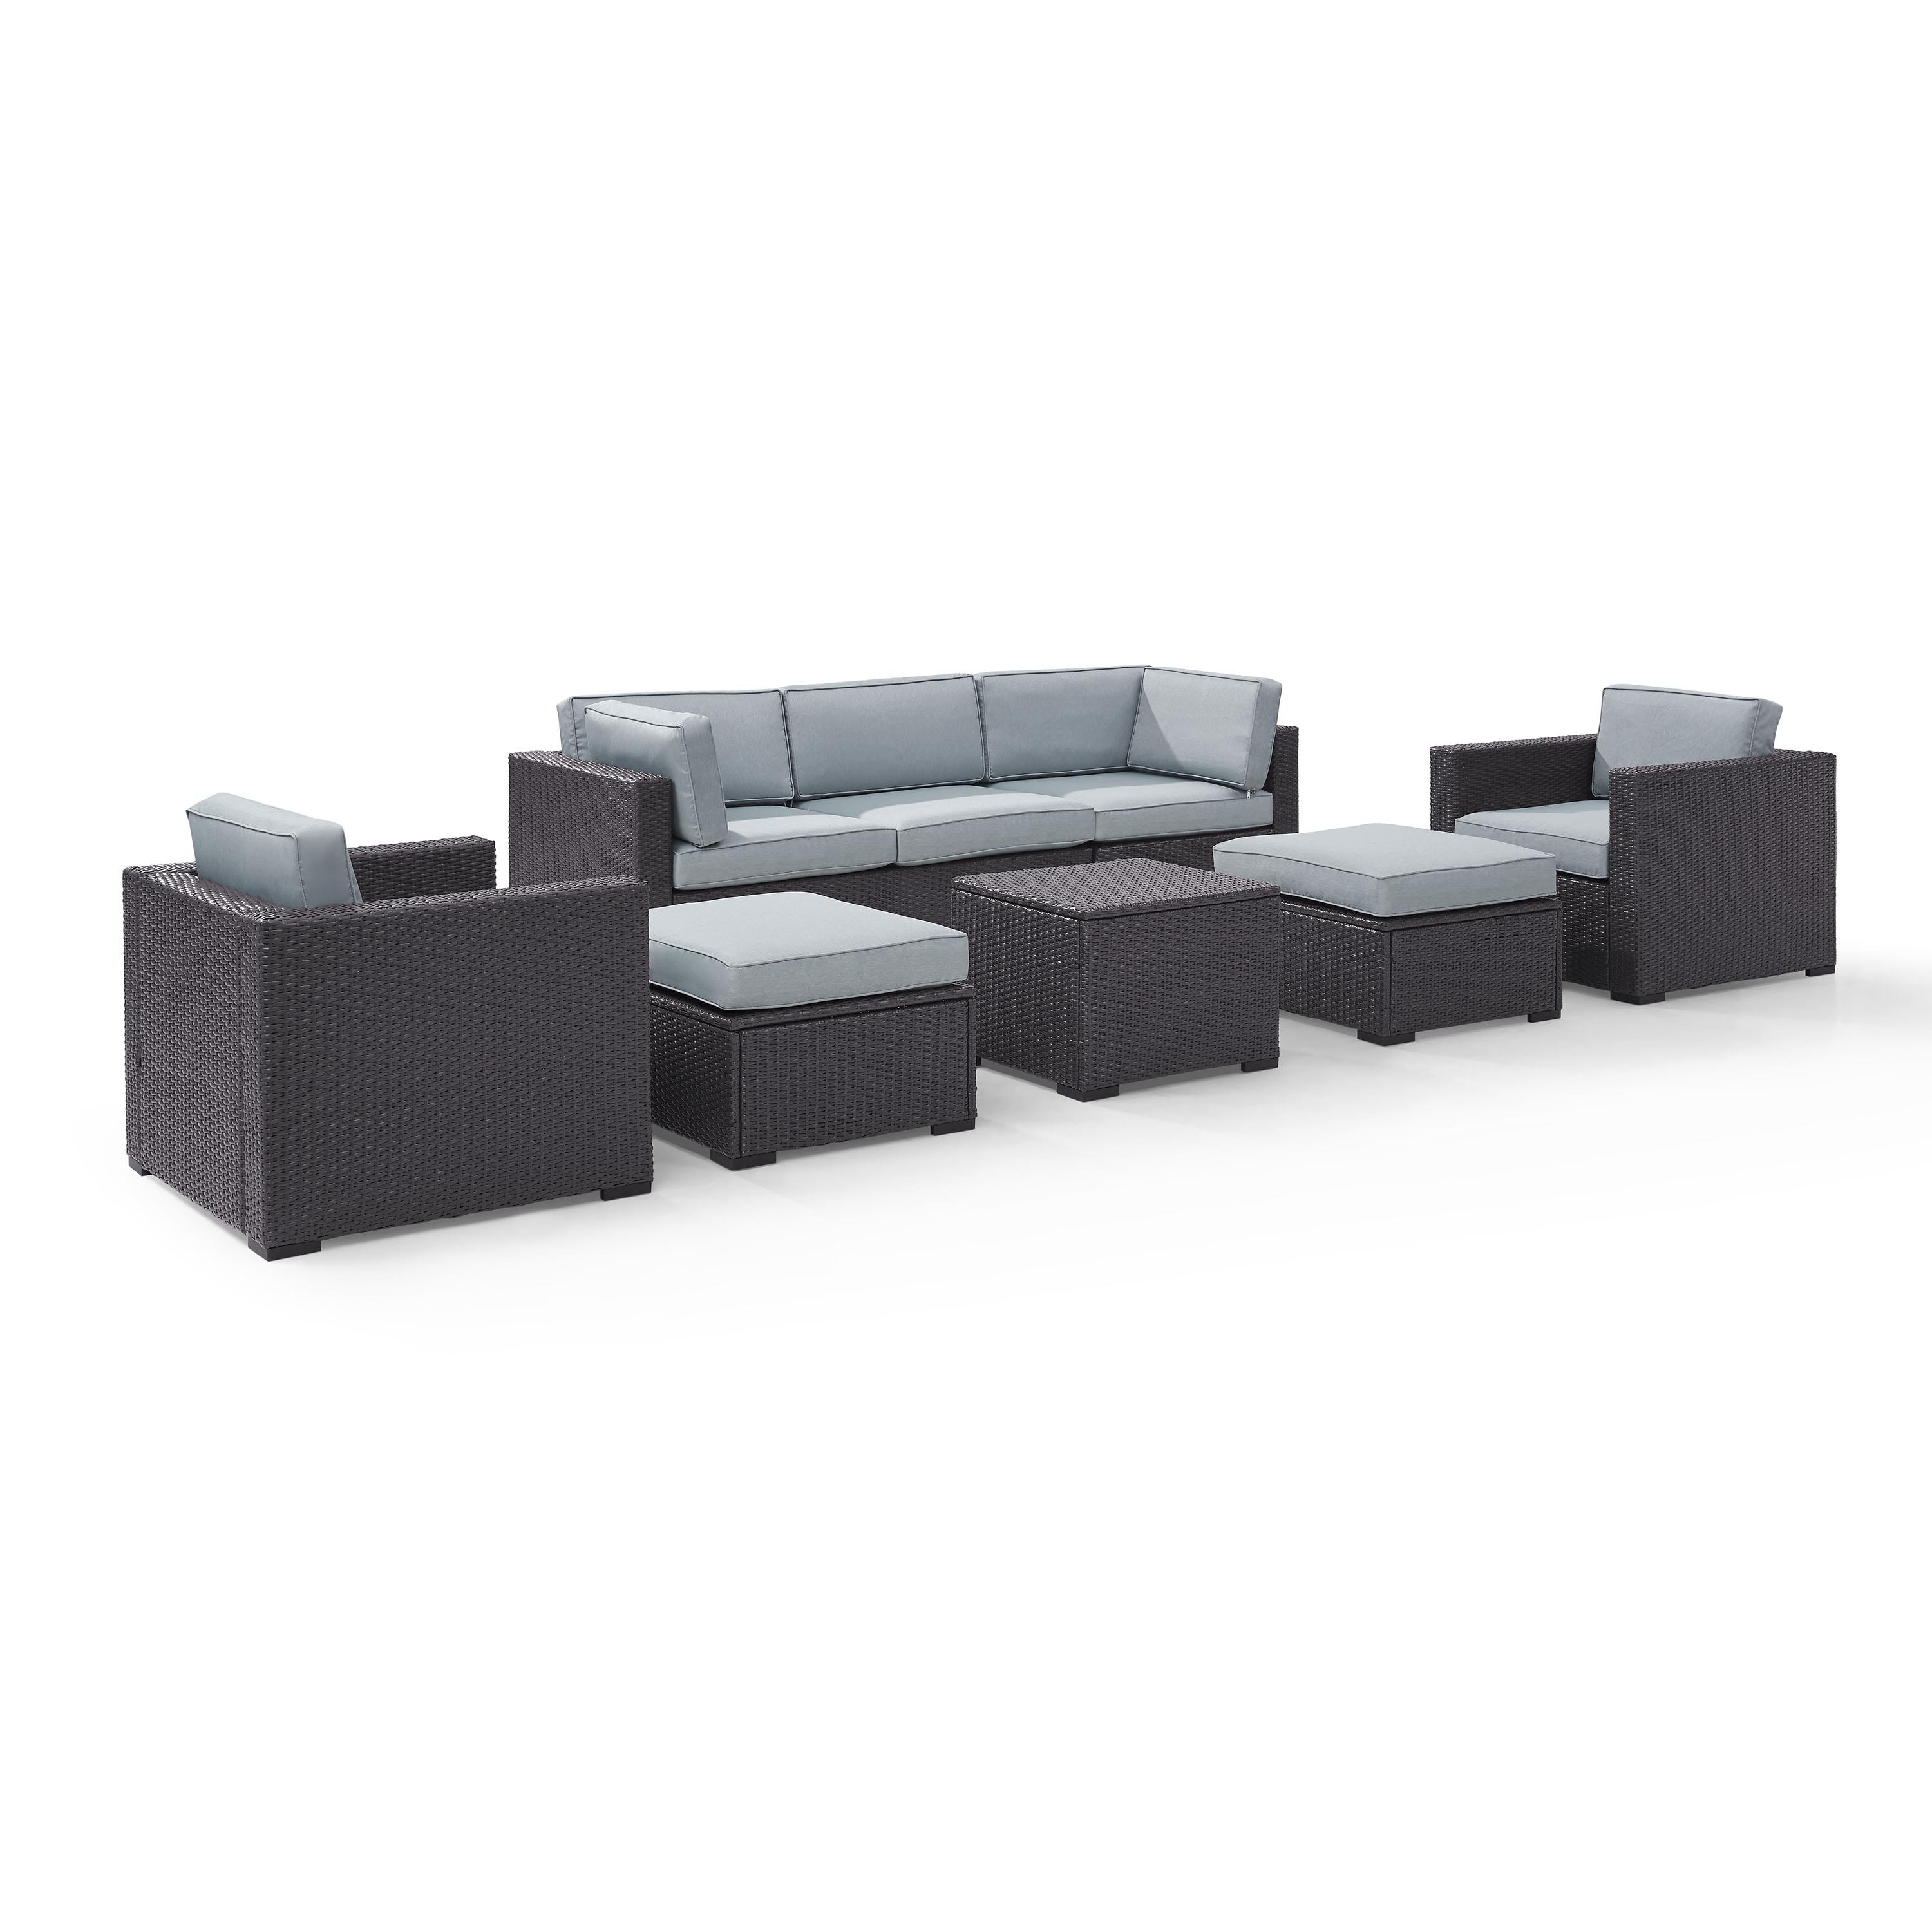 Crosley Furniture Biscayne 7 Piece Metal Patio Sofa Set in Brown/Blue - image 2 of 4